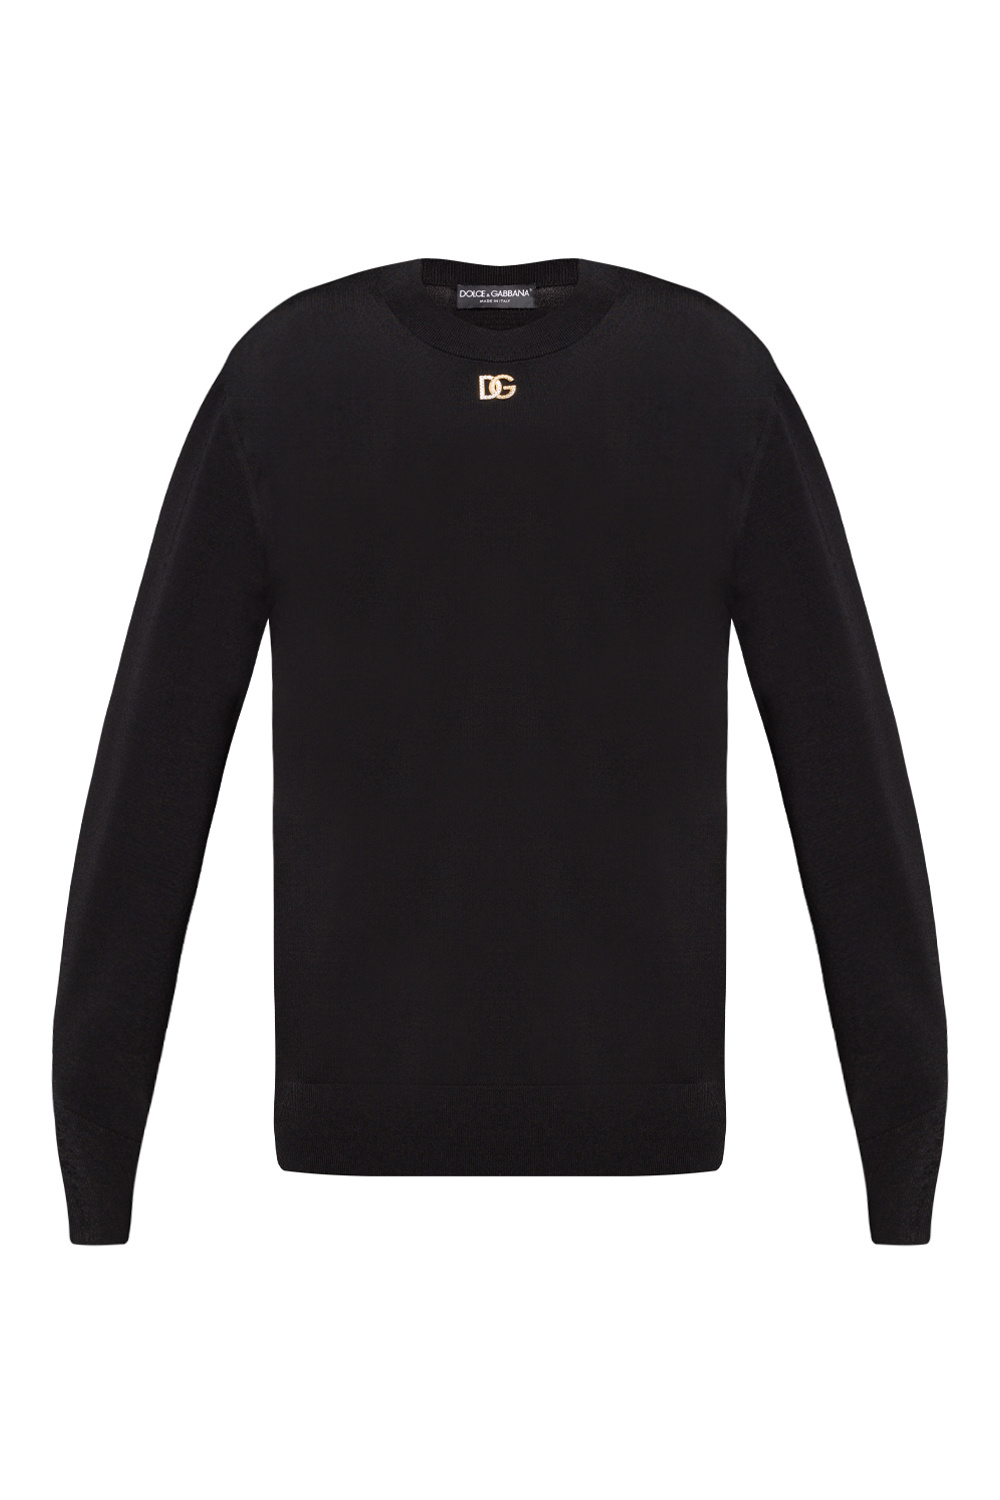 Dolce & Gabbana Sweater with logo | Women's Clothing | IetpShops